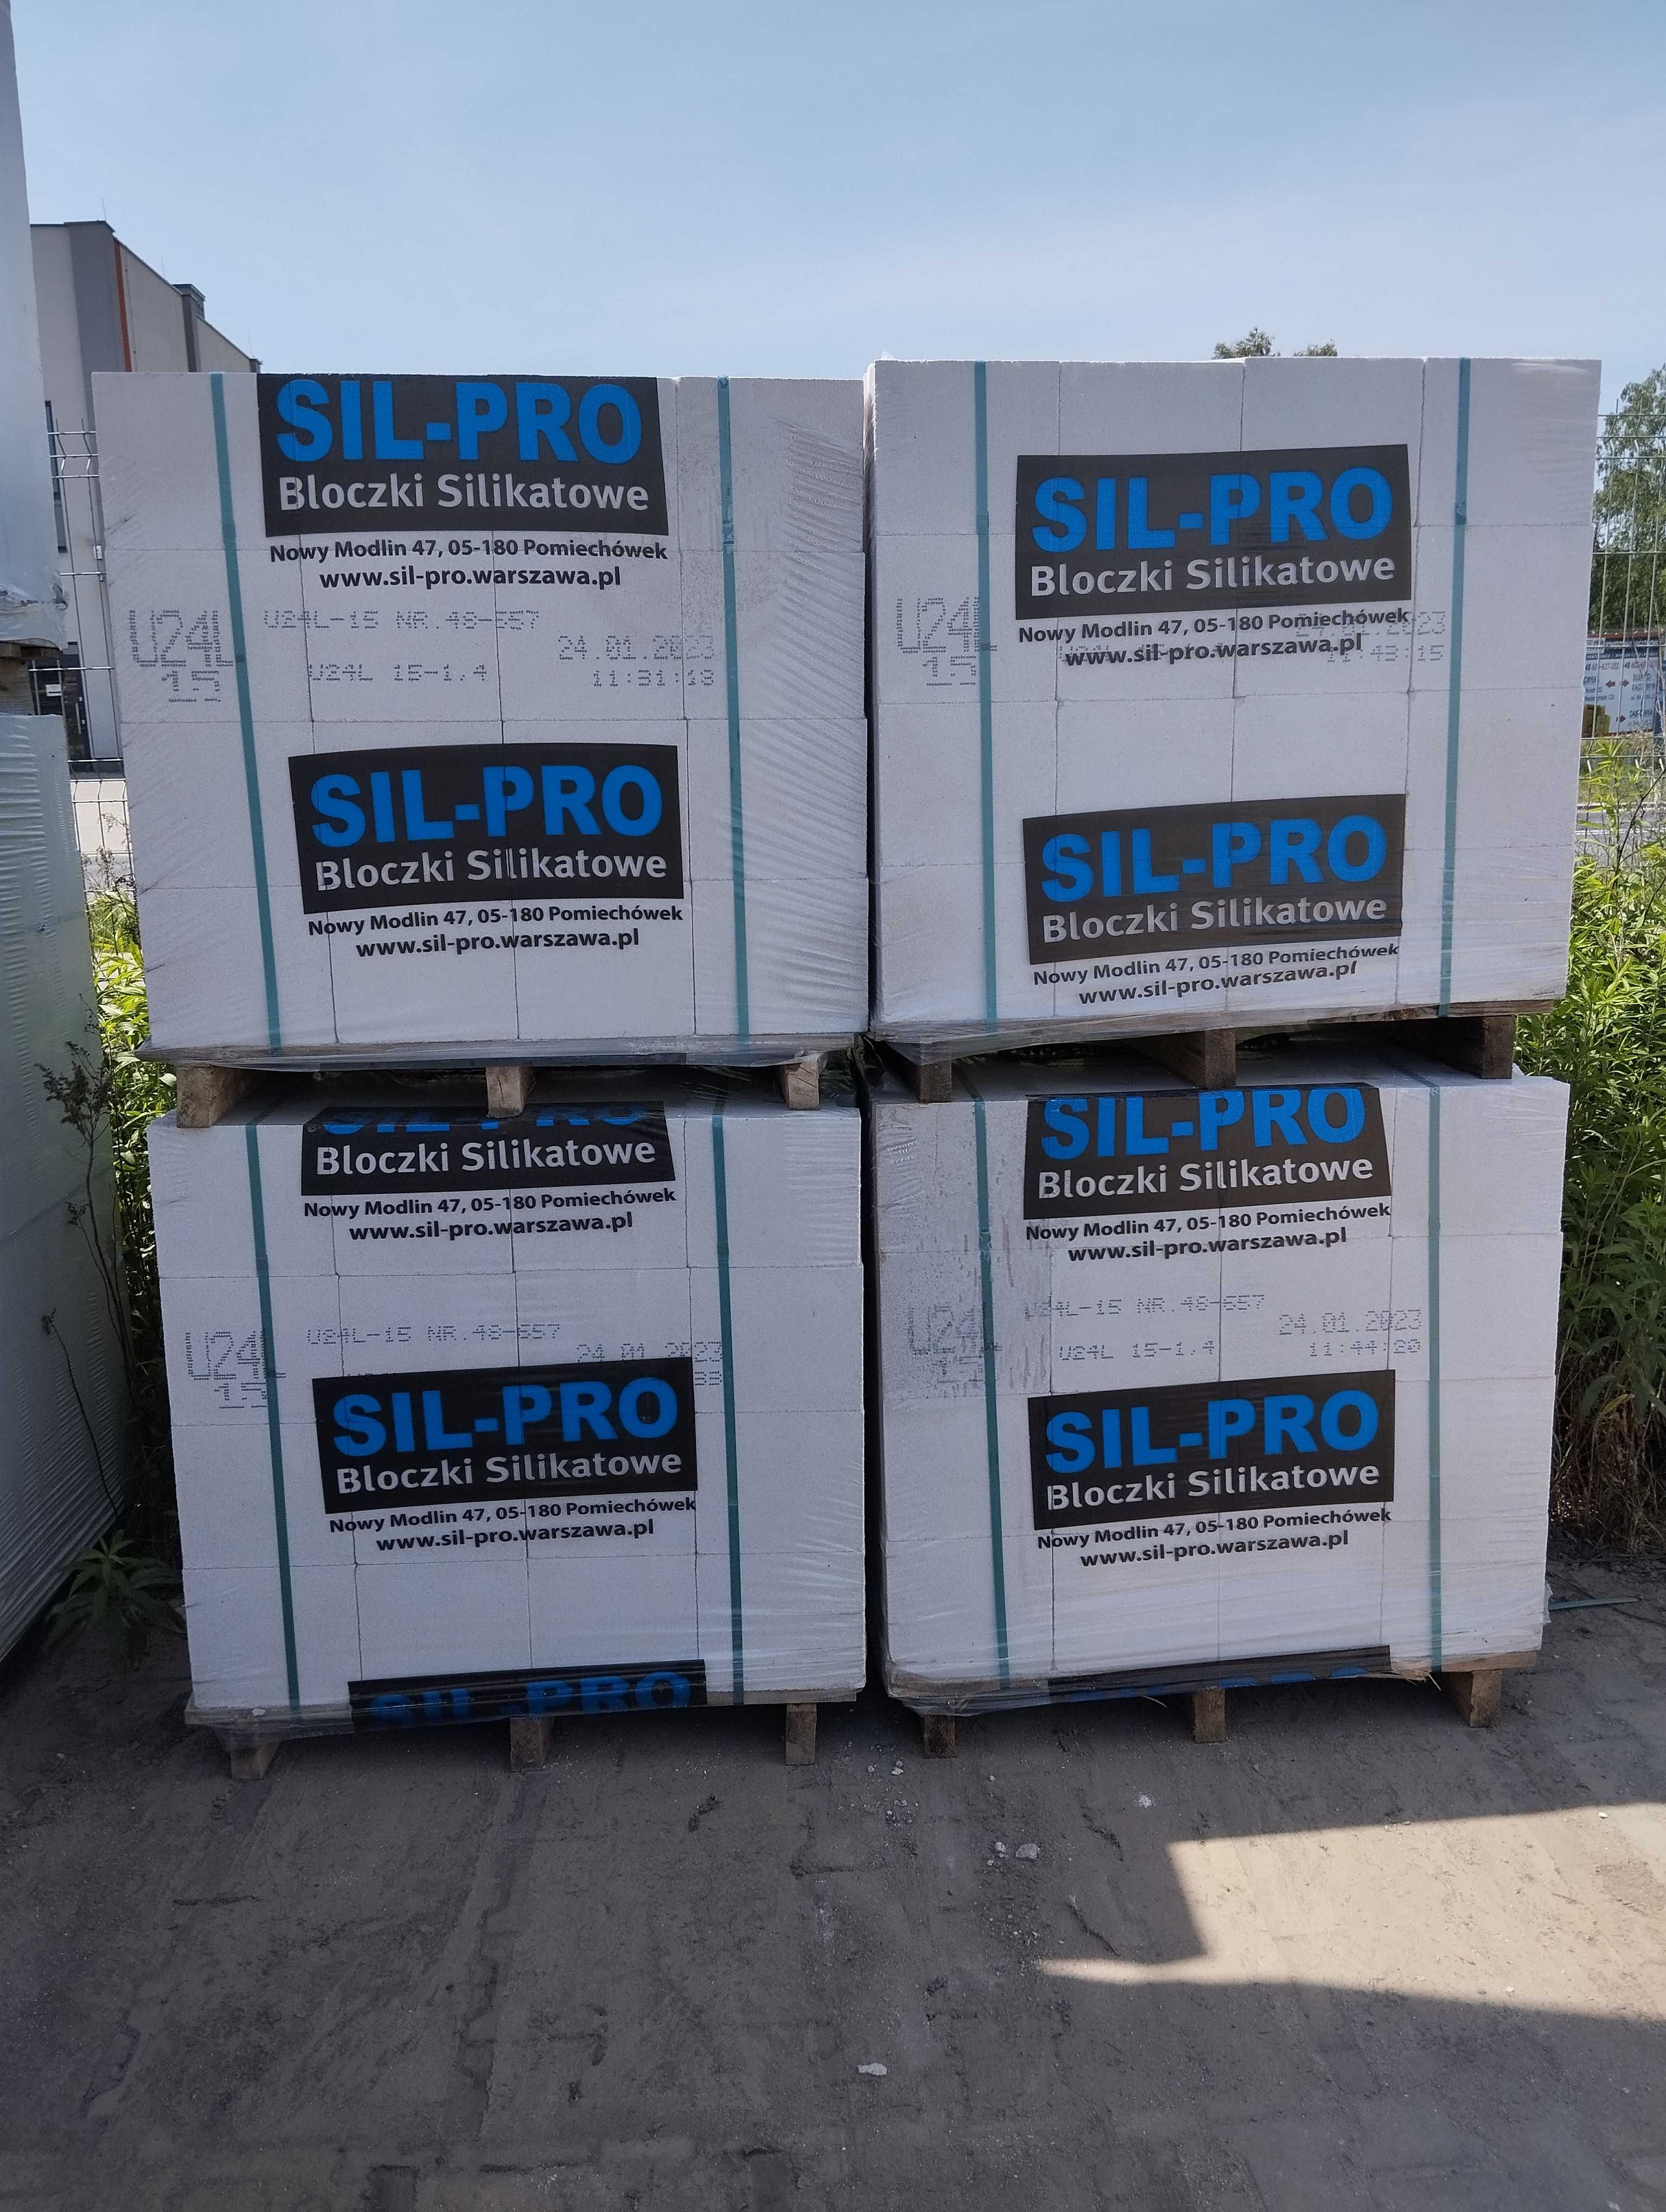 SILPRO Bloczek silikatowy U24 kl 15 25x24x22